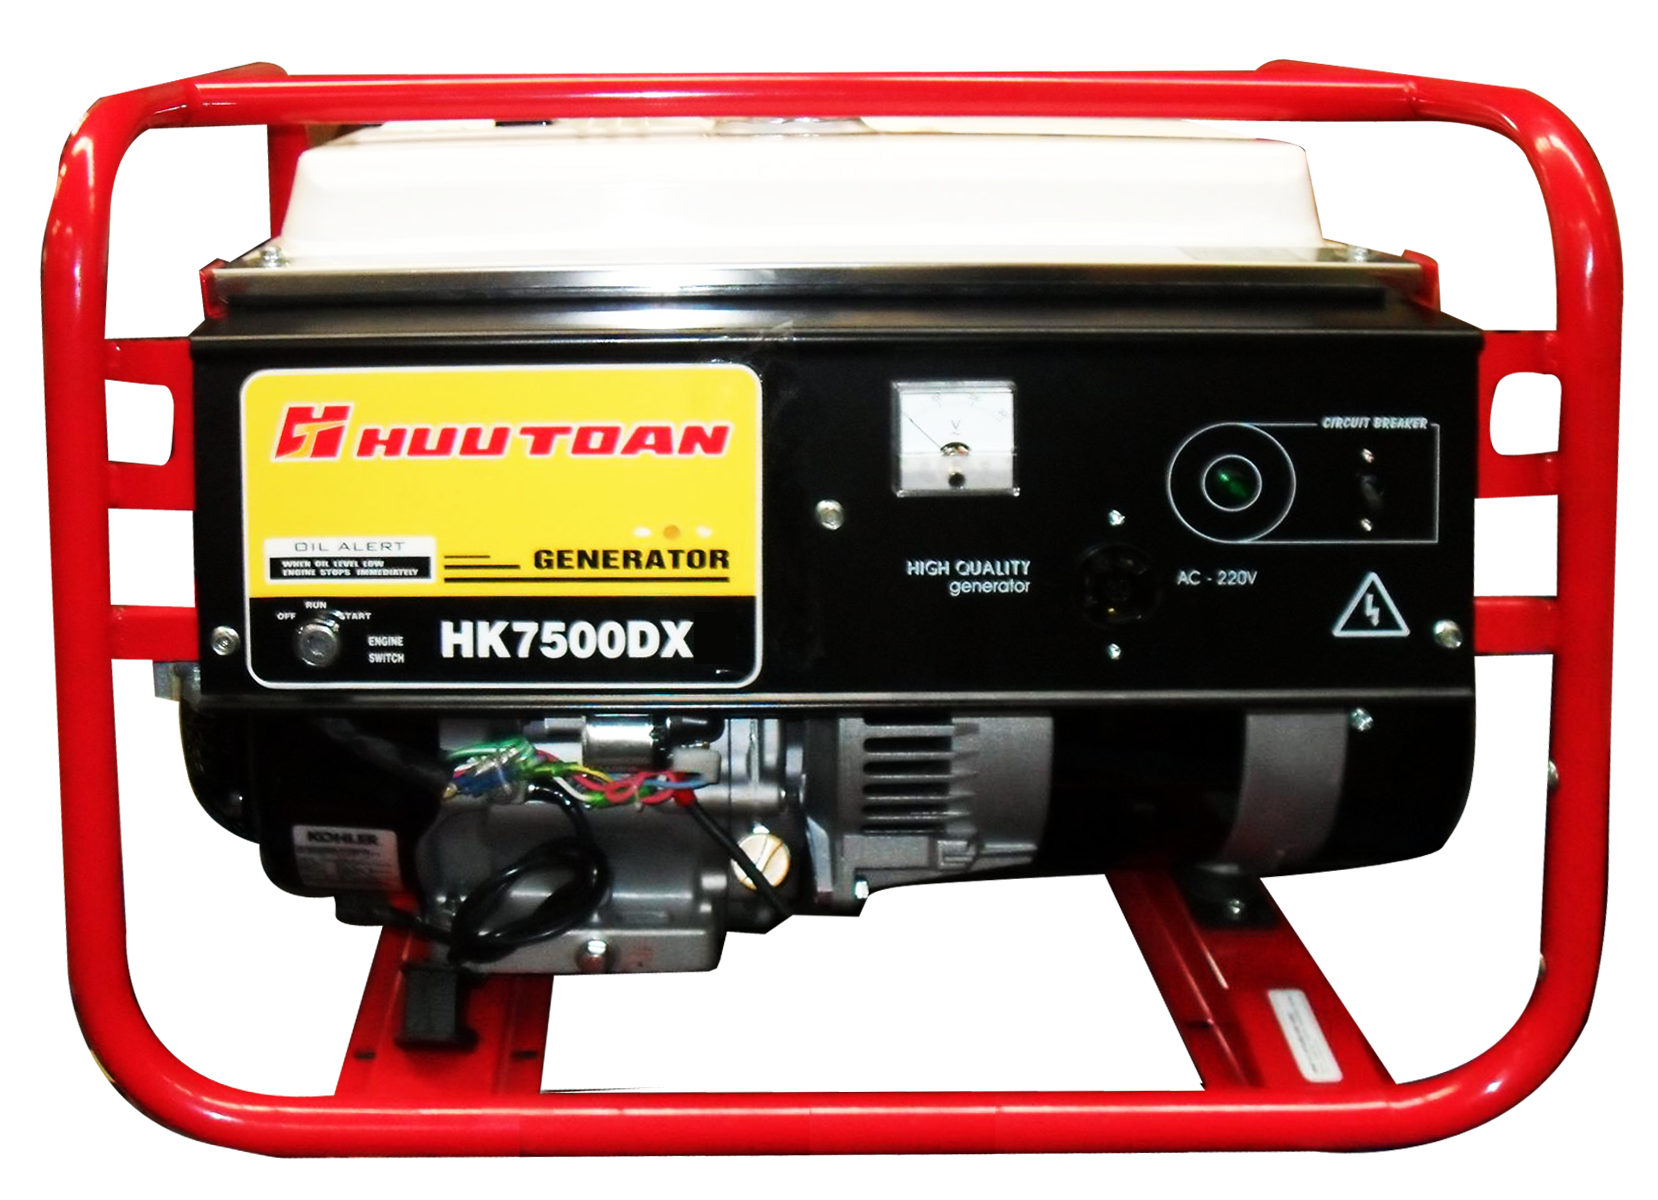 13. Troubleshooting starting error in Huu Toan gasoline generator HK7500